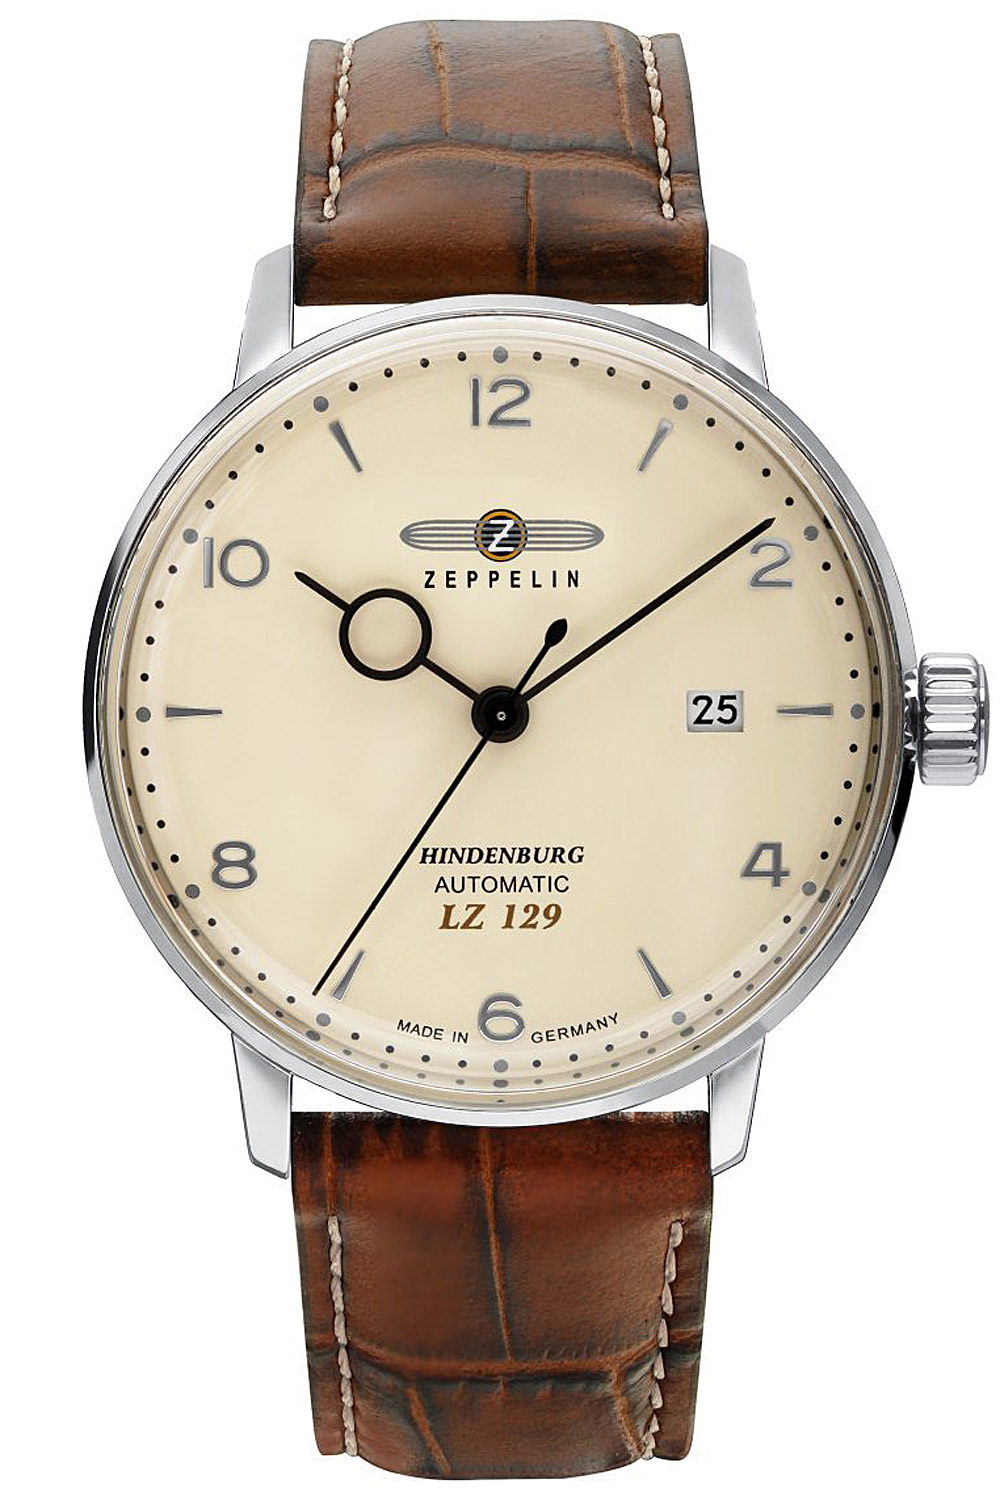 Мужские часы zeppelin. Часы Zeppelin LZ 129. Zeppelin lz129 Hindenburg часы. Наручные часы Zeppelin Zep-80425. Часы мужские Zeppelin LZ 129.